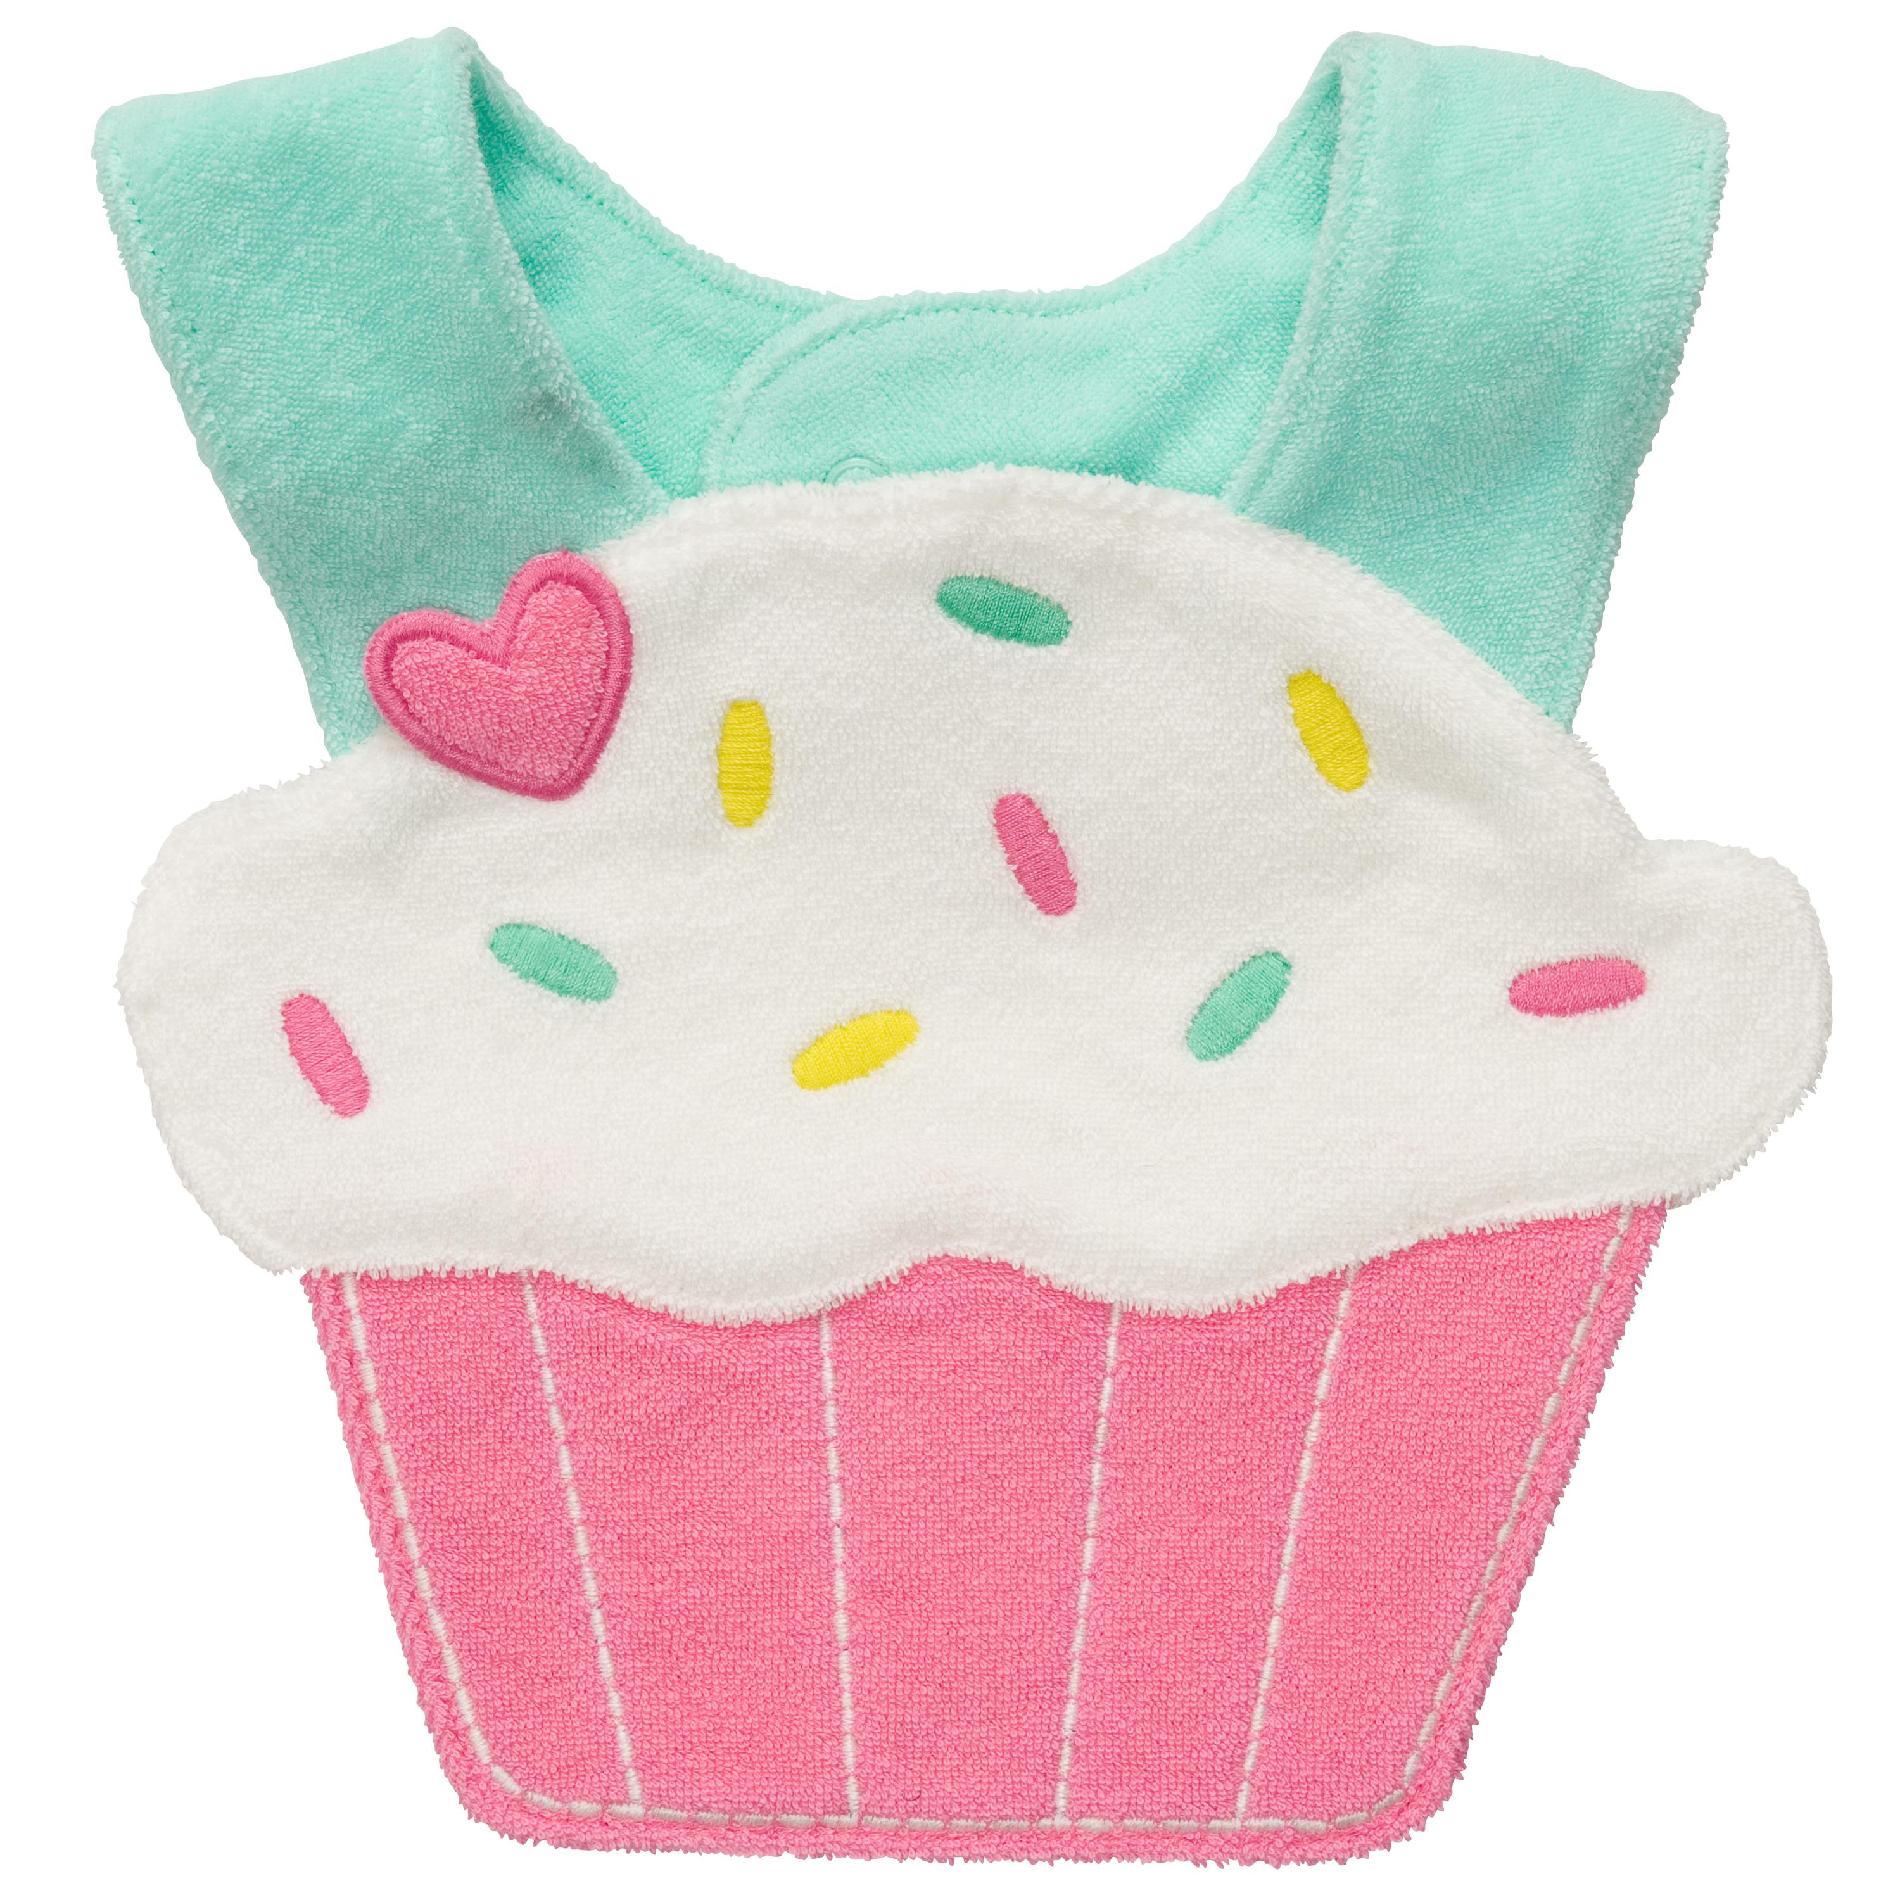 Carter's Infant Girl's Bib - Cupcake